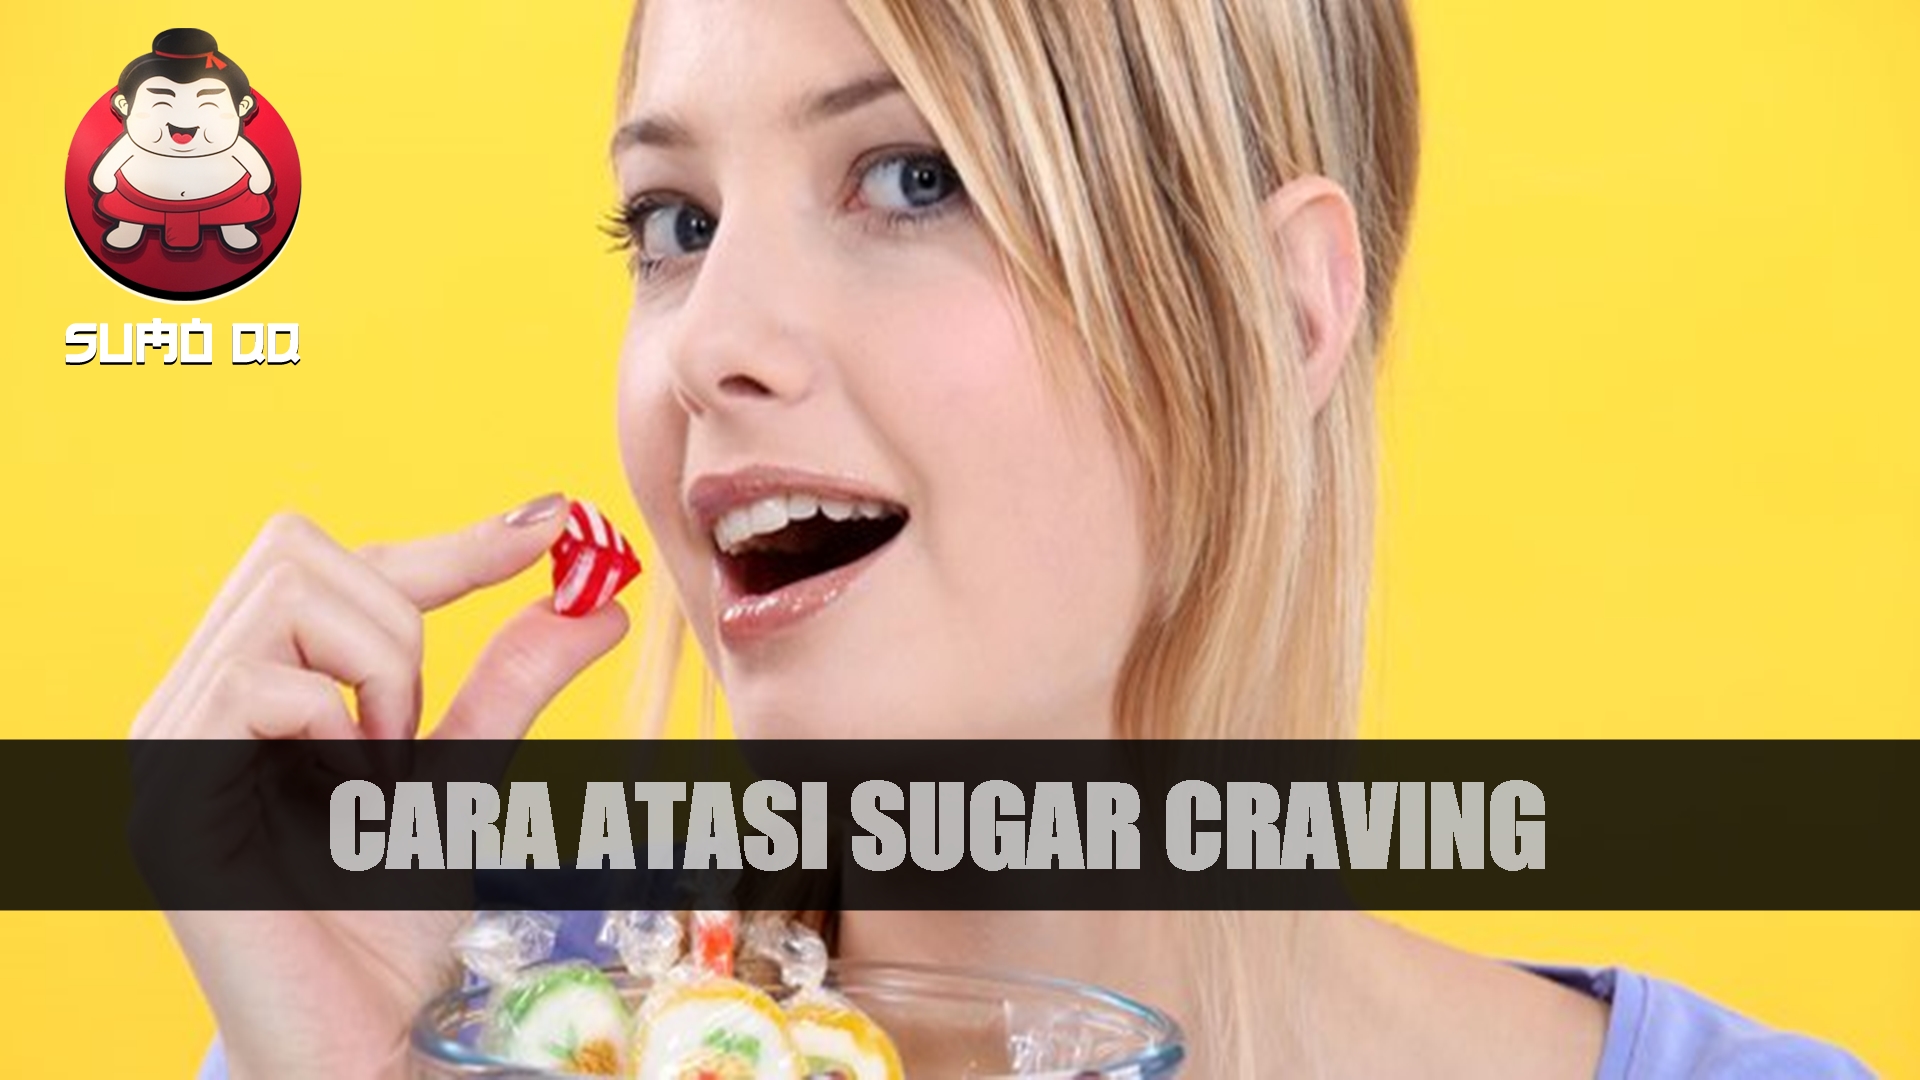 5 Buah Bisa Bantu Atasi Sugar Craving